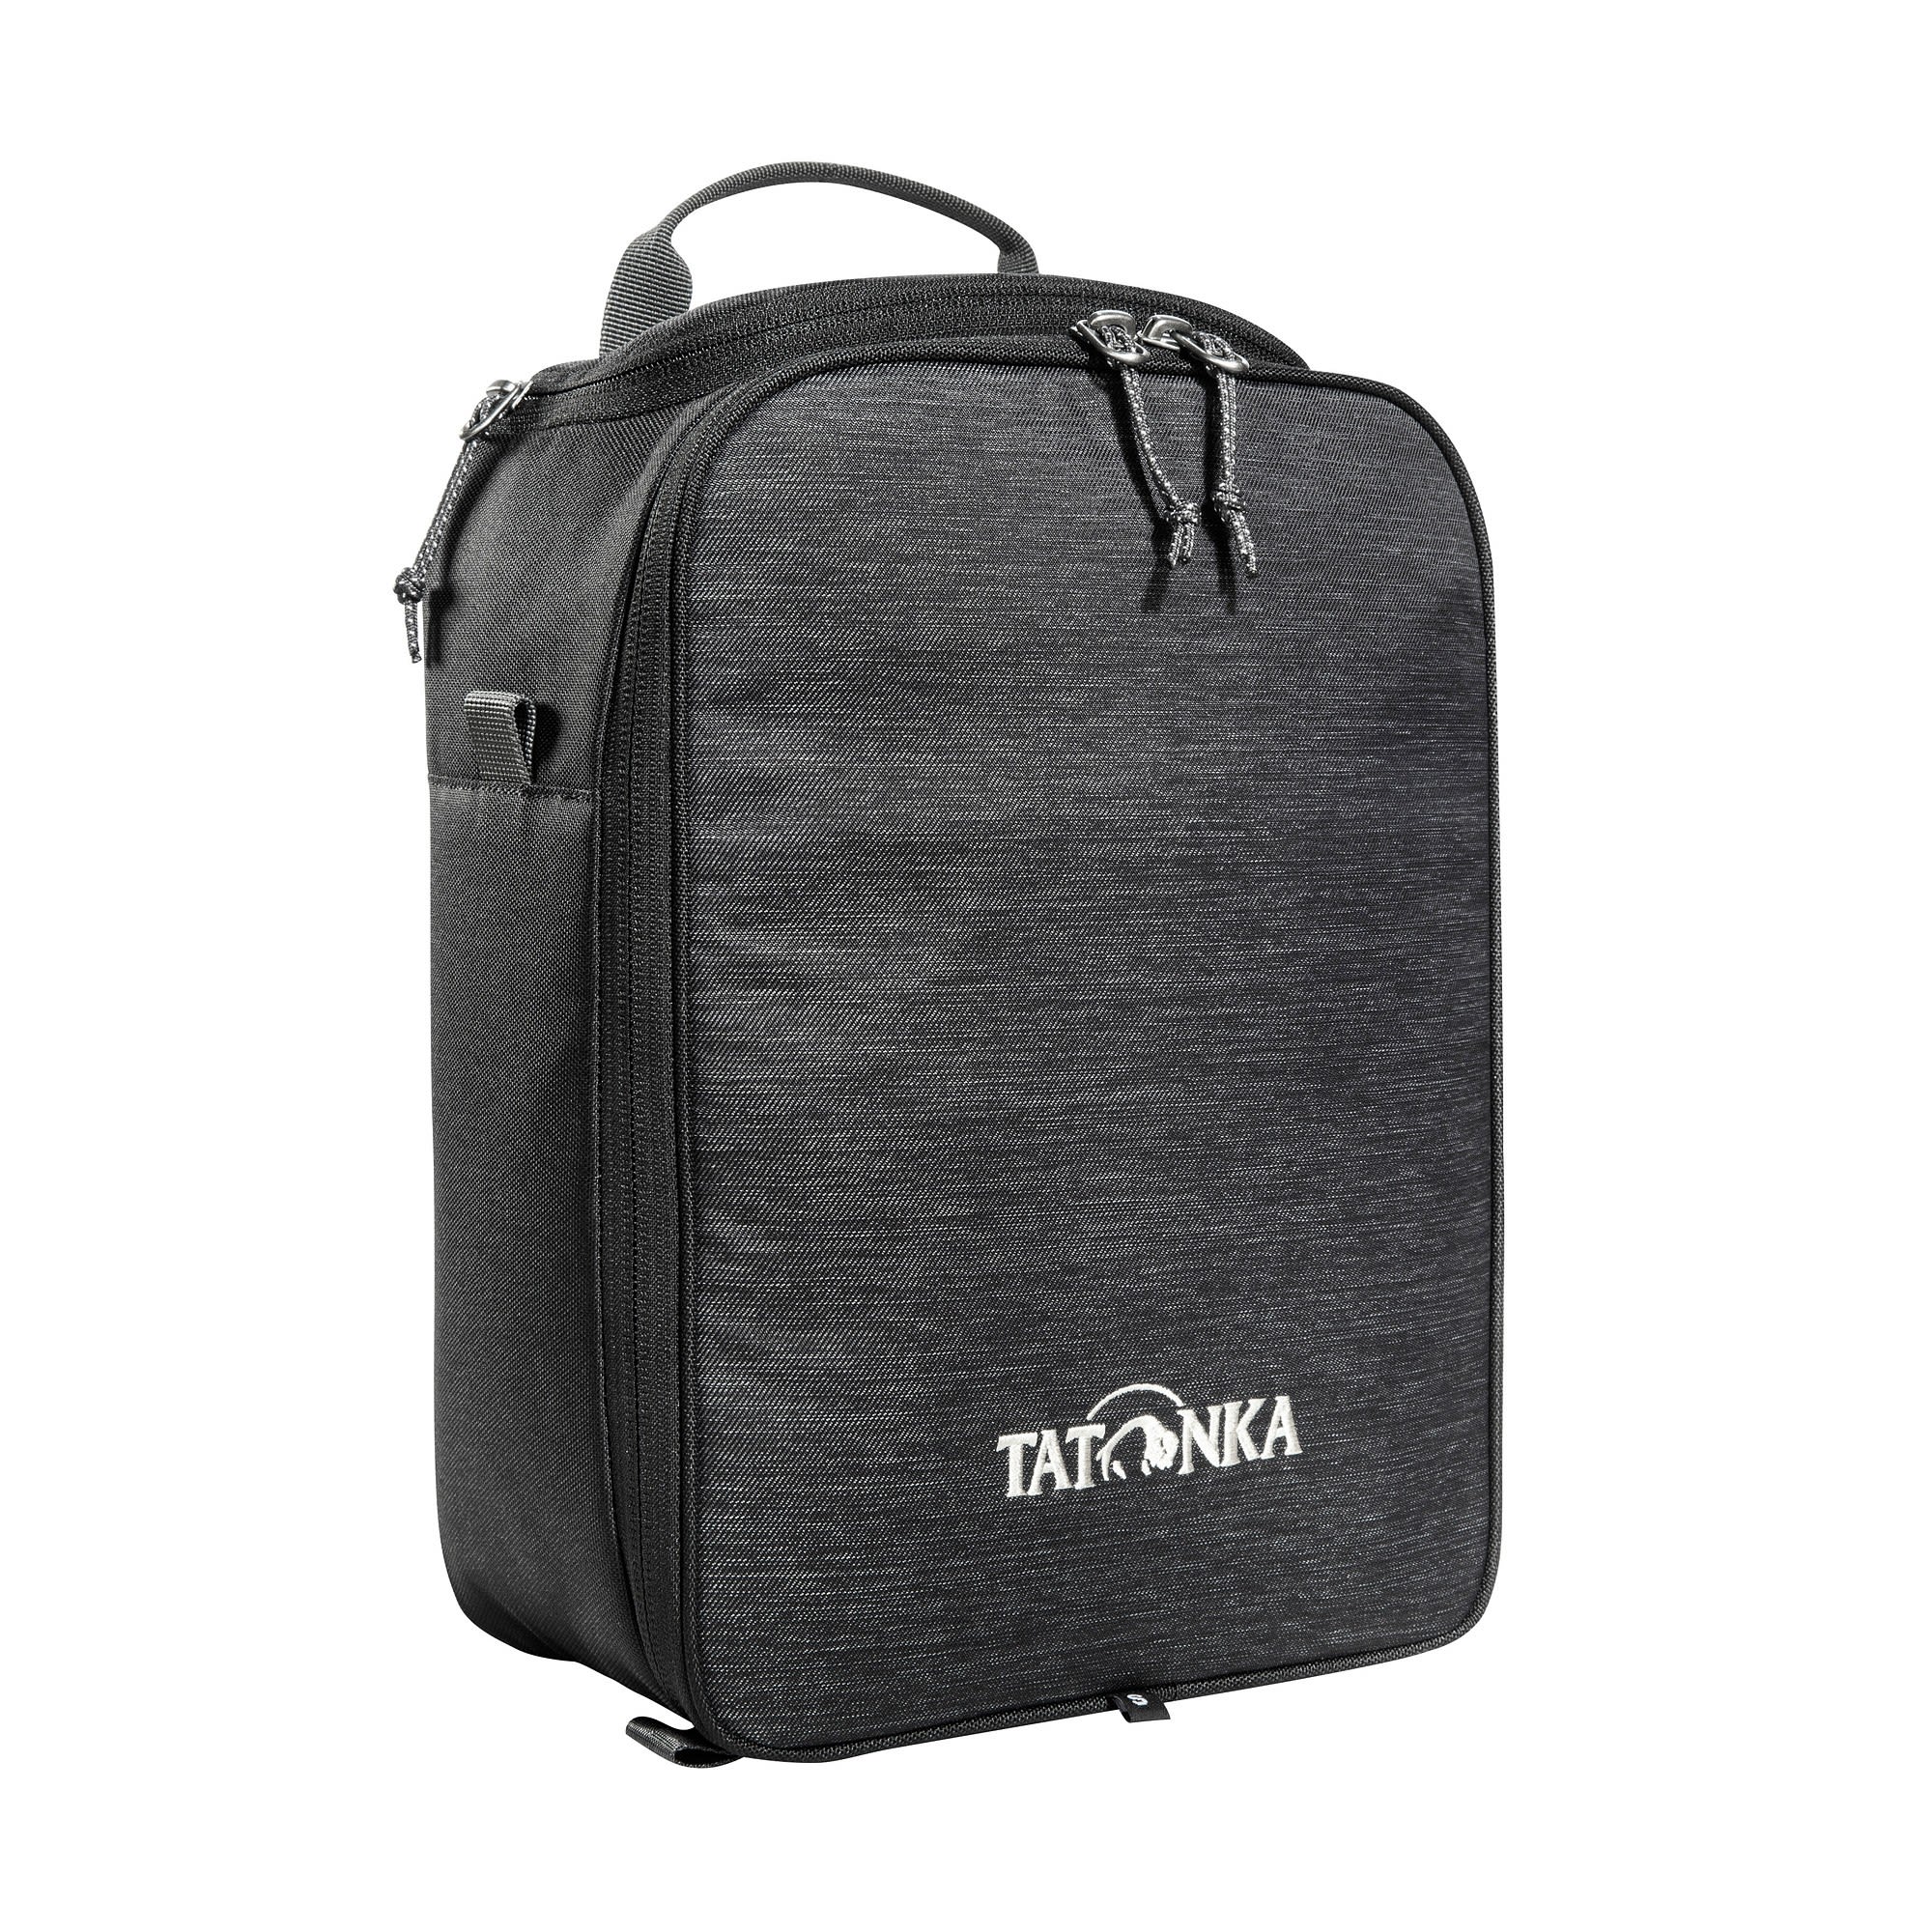 Tatonka Cooler Bag S Schwarz- Sonstige Taschen- Grsse 6l - Farbe Off Black unter Tatonka